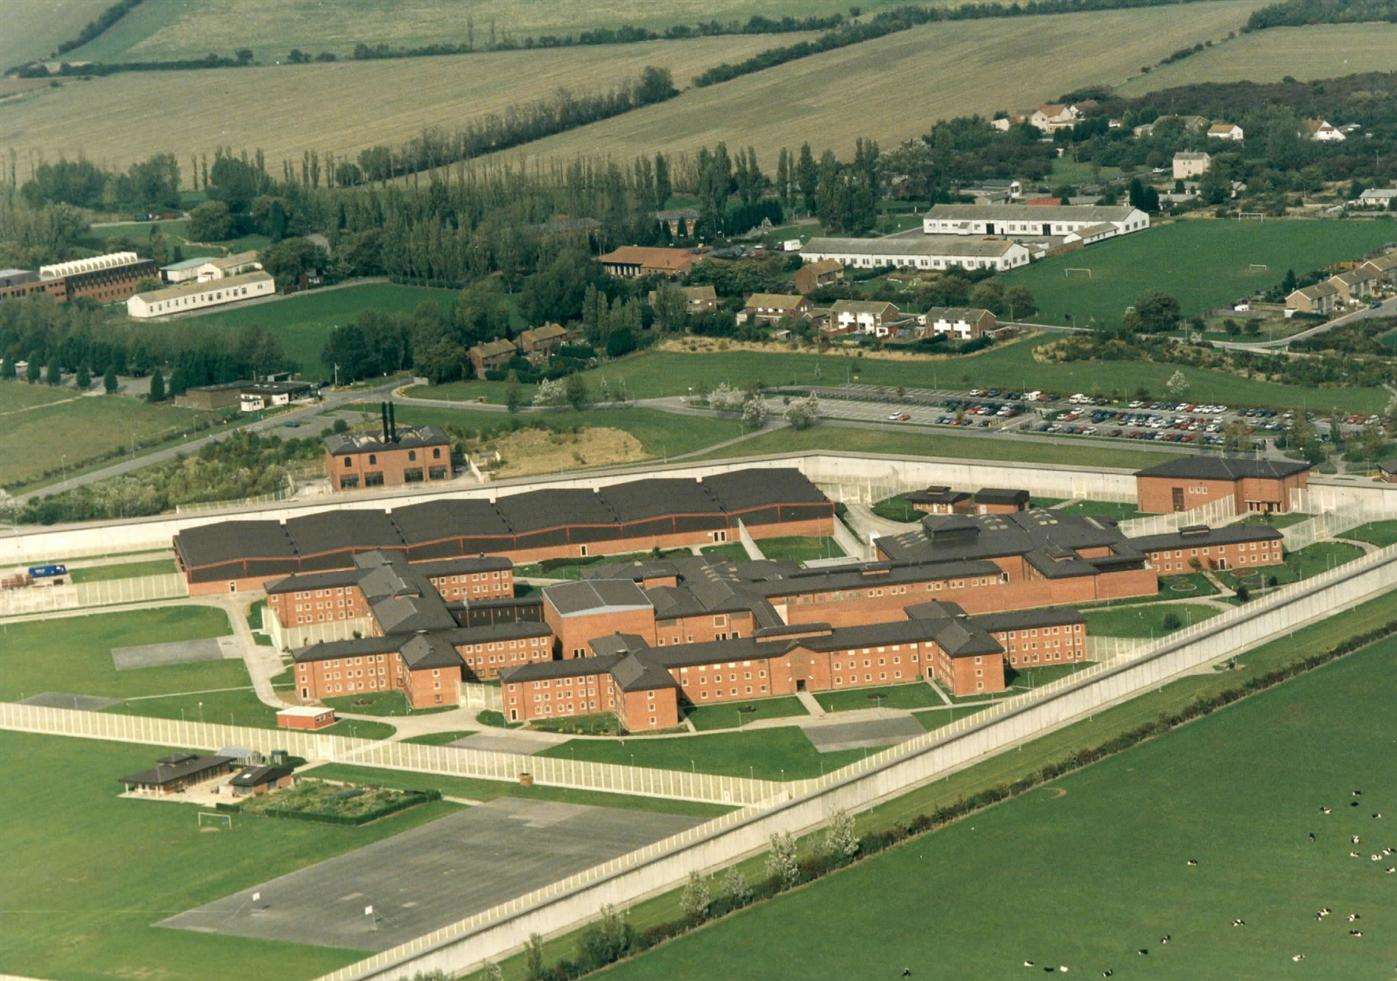 Eastchurch Prison